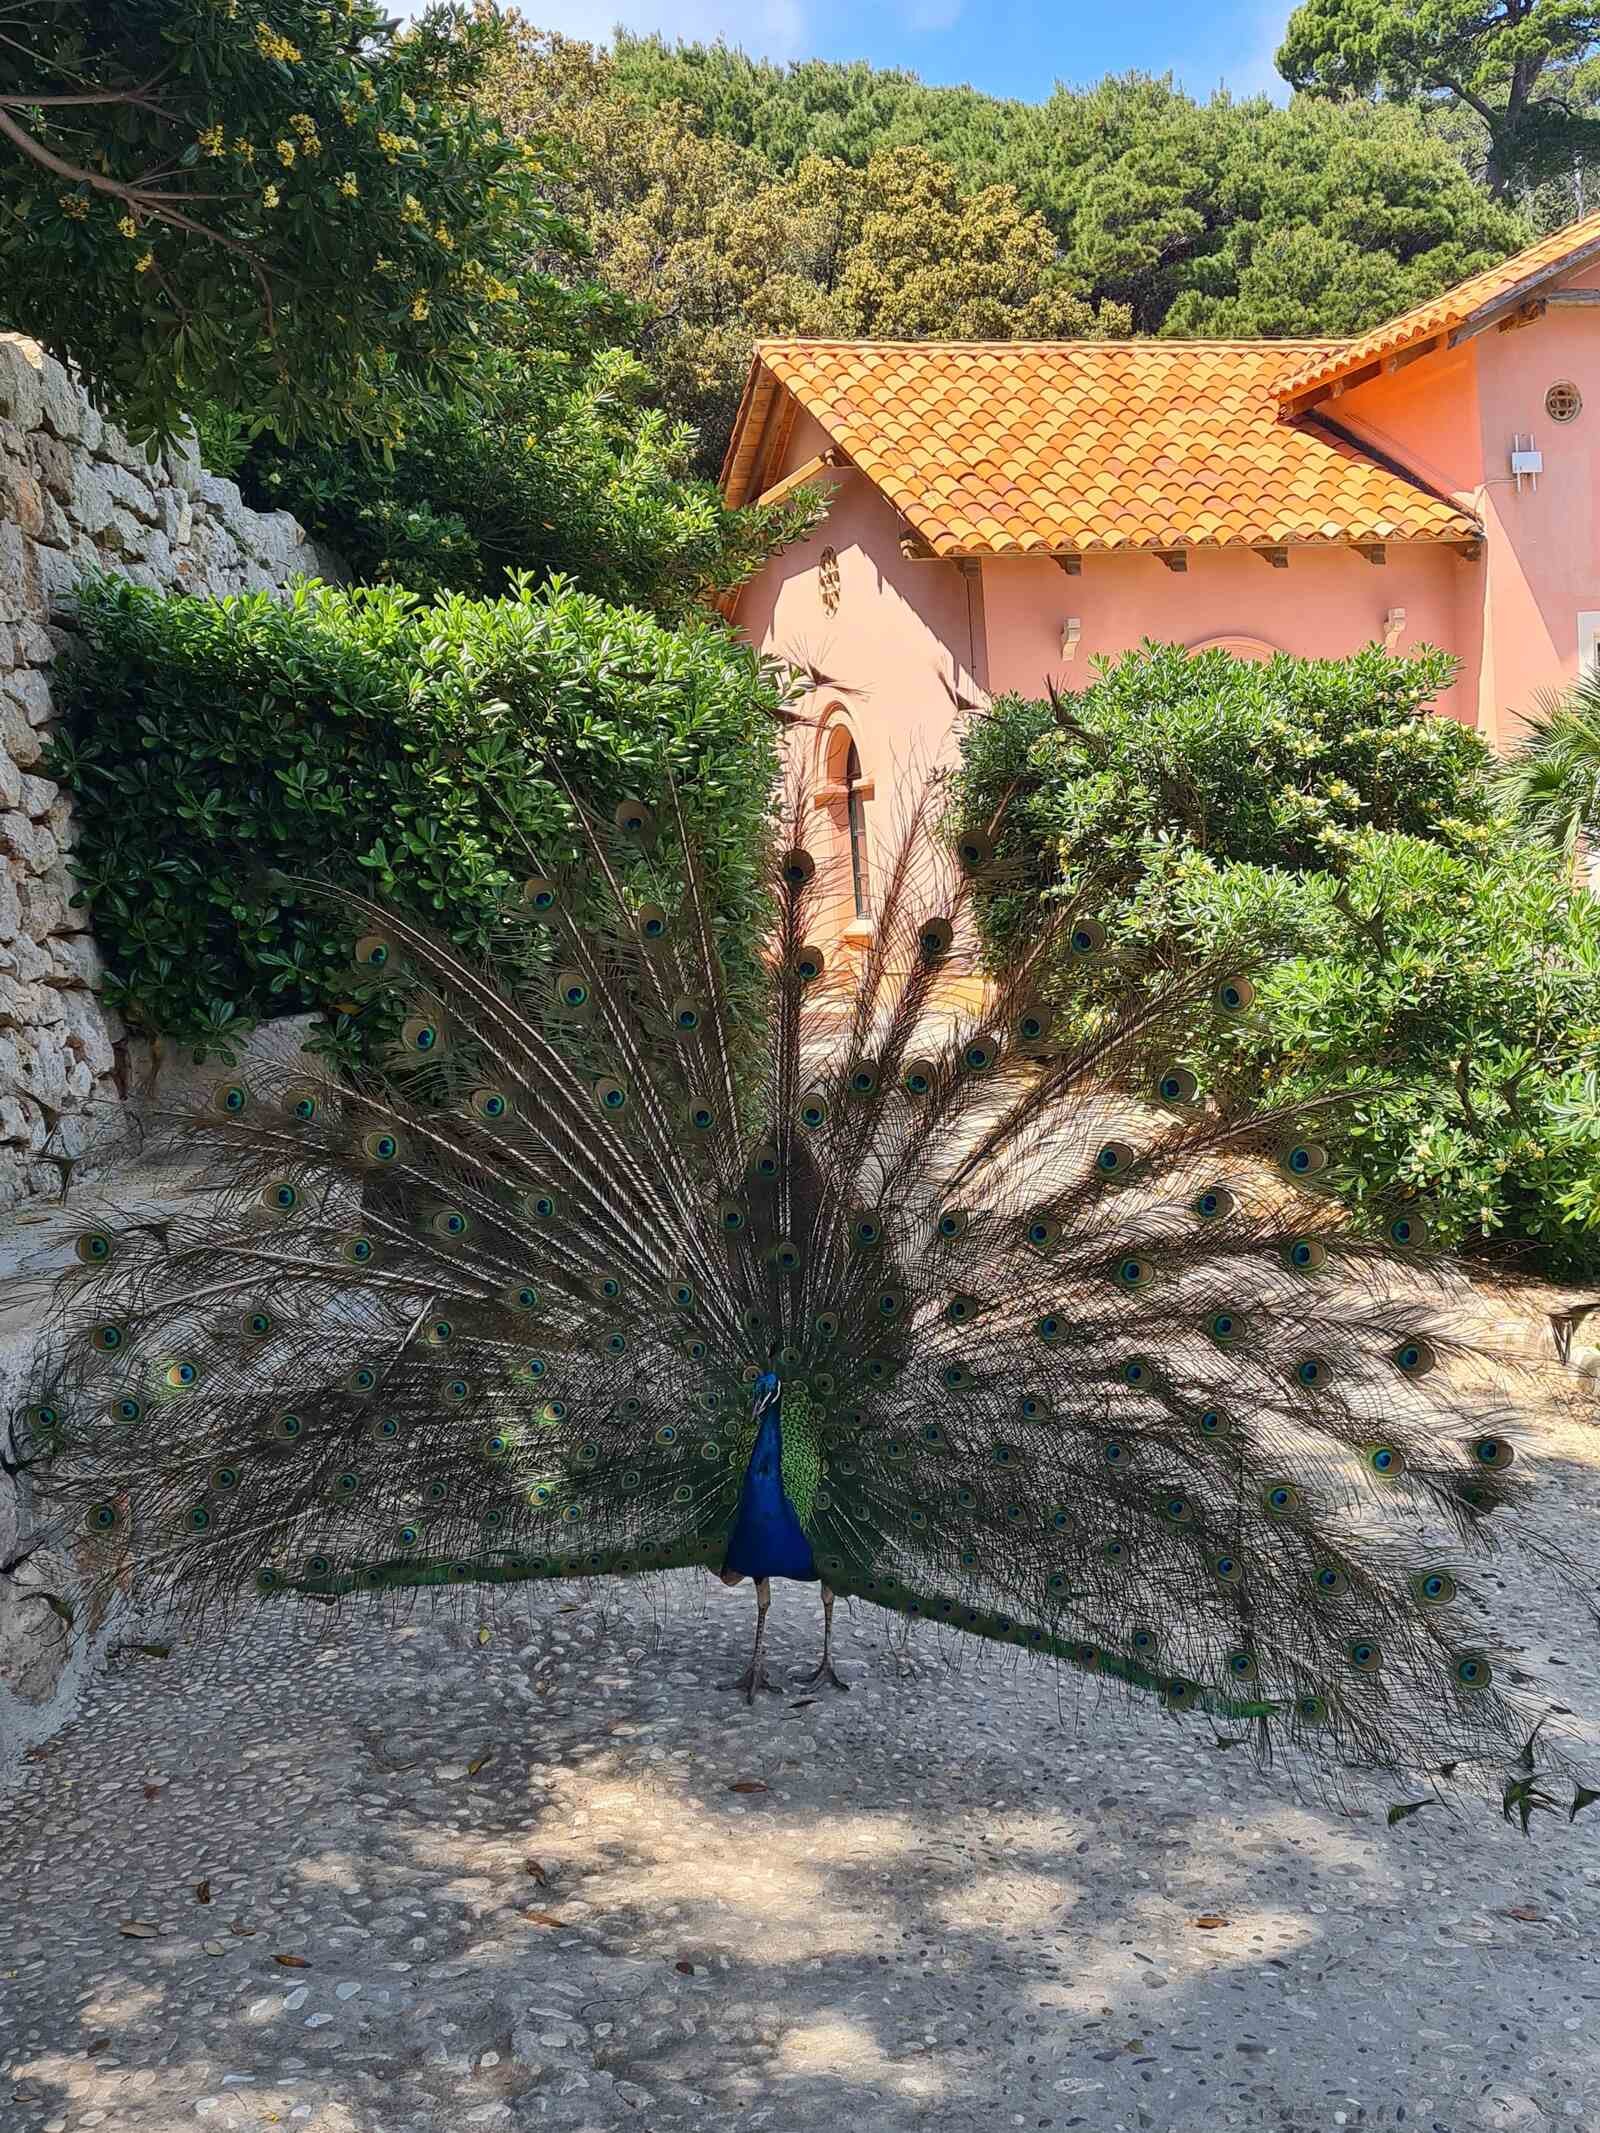 Roaming peacocks